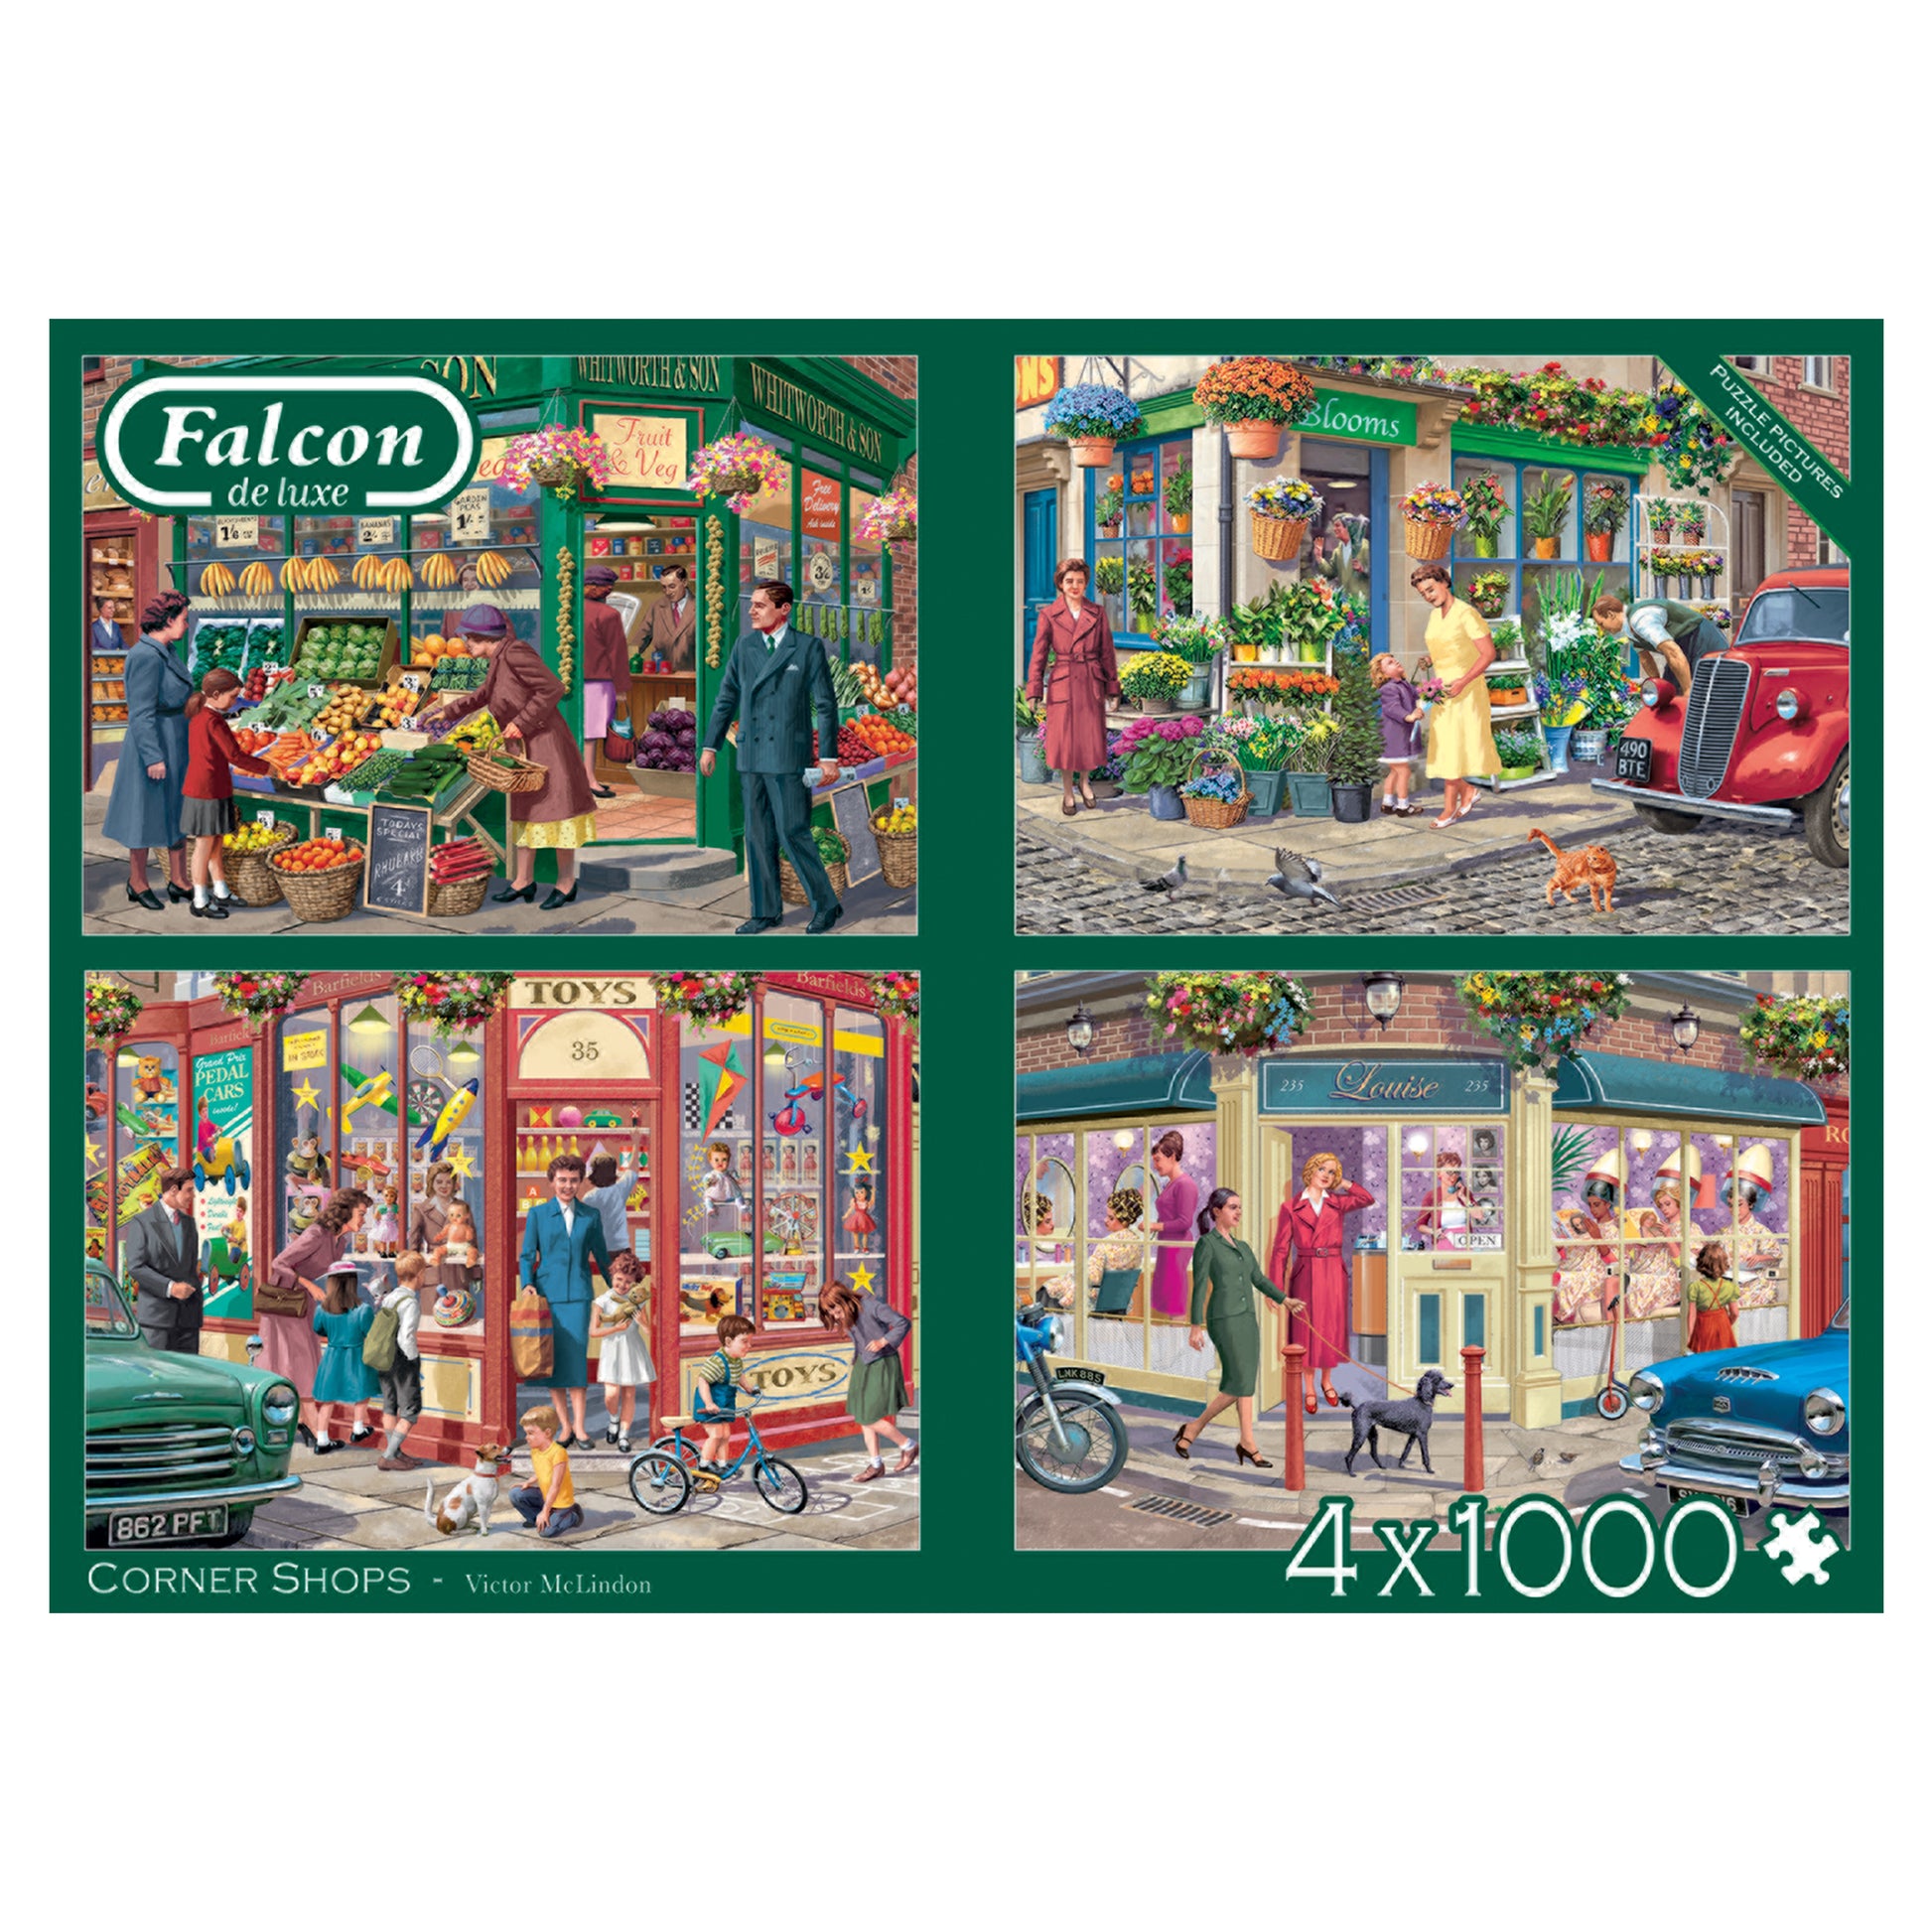 Falcon - Corner Shops (4x1000 pieces) - product image - Jumboplay.com